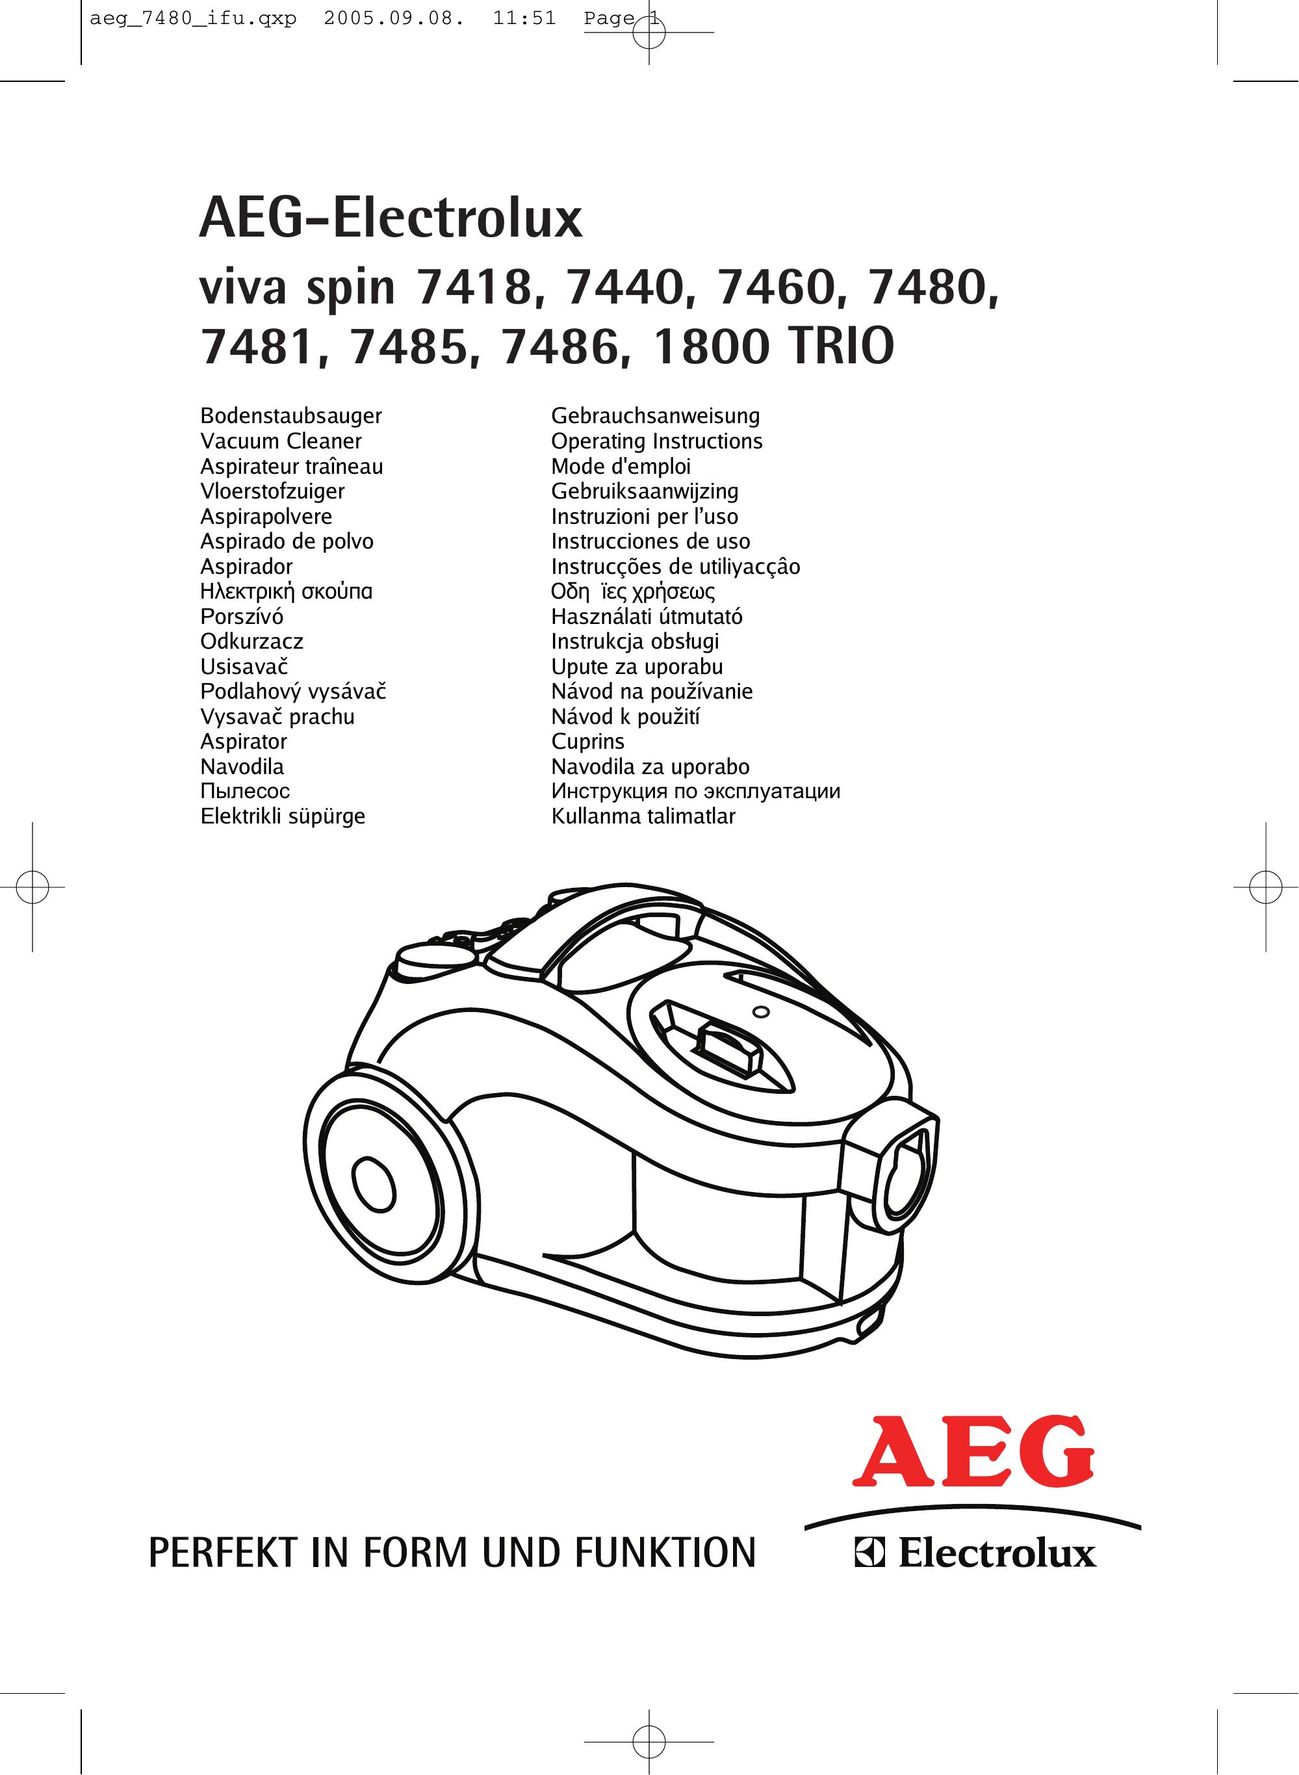 AEG 7486 Vacuum Cleaner User Manual